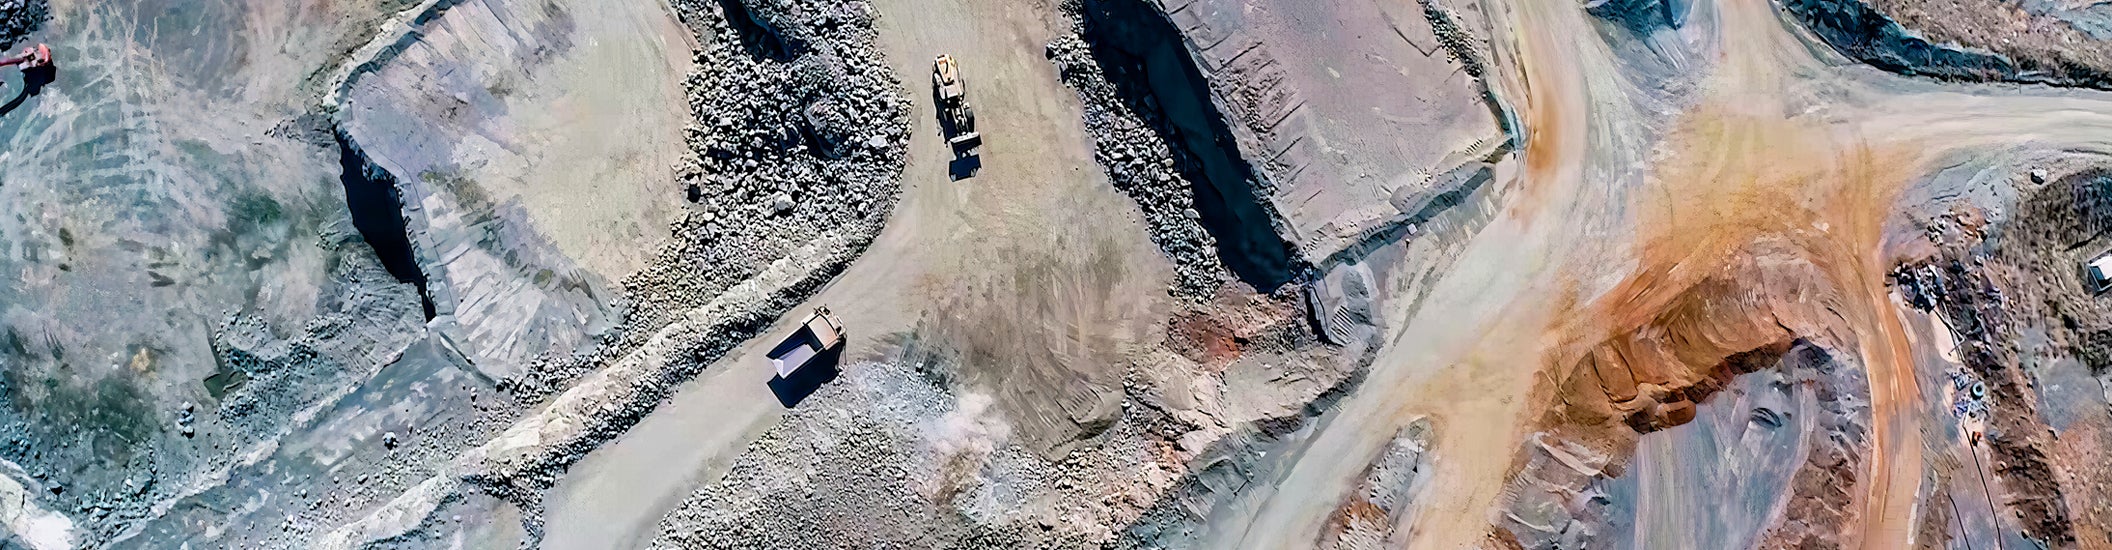 "mining area with trucks"